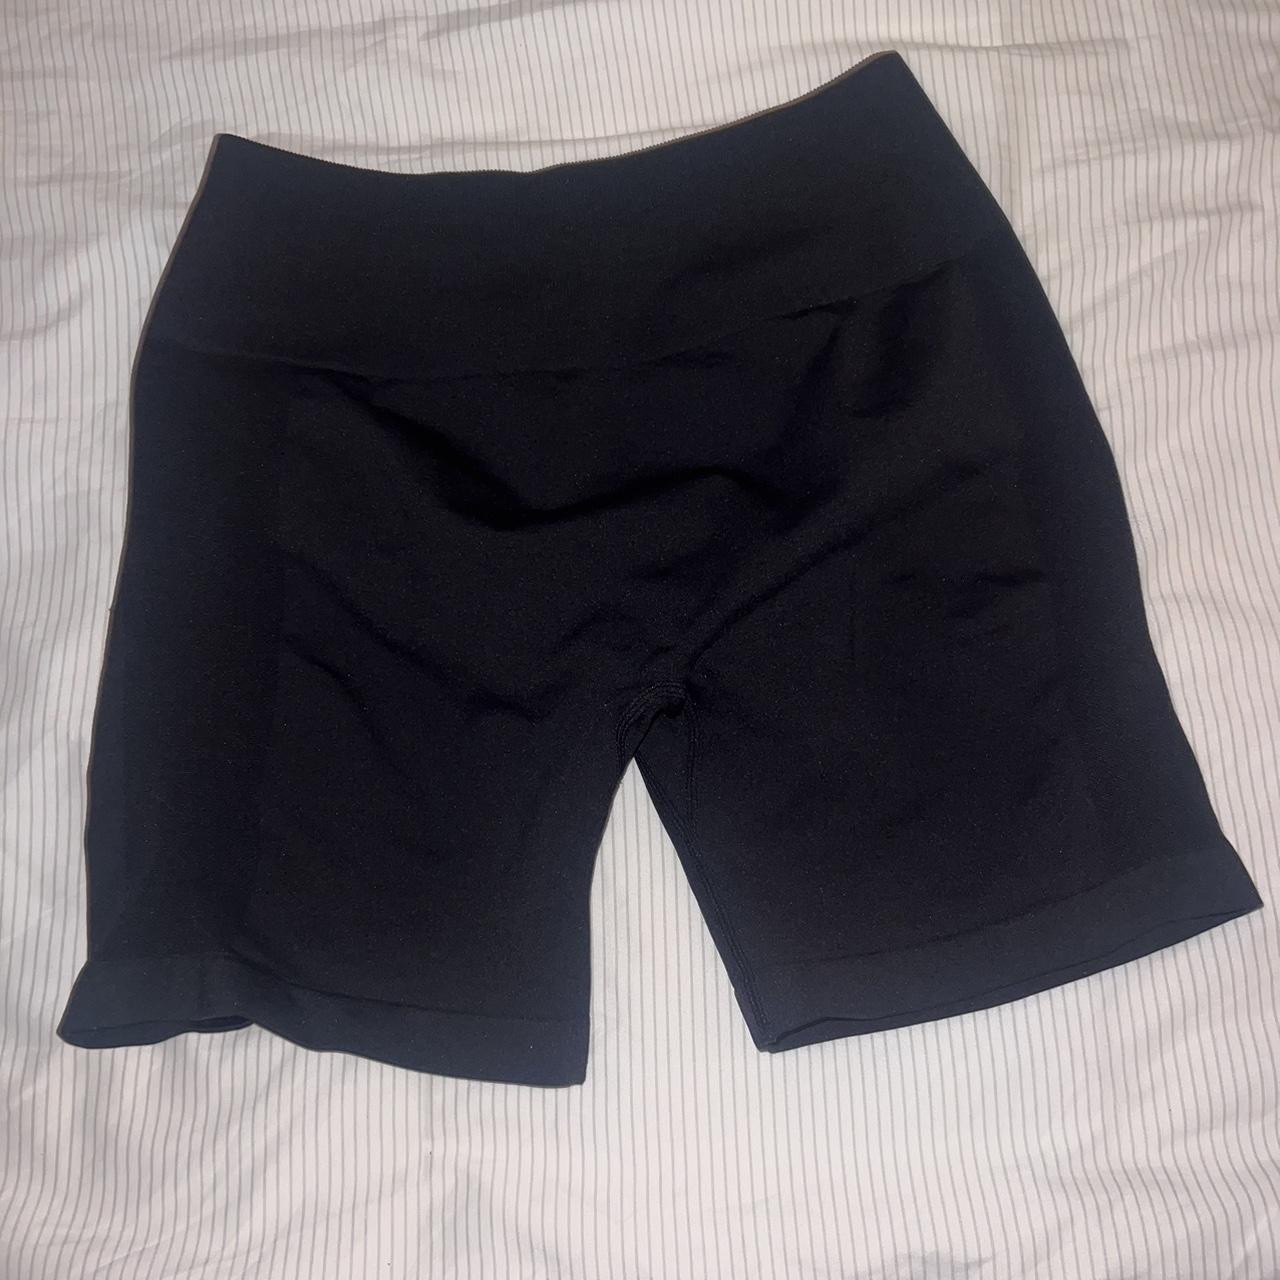 Aurola Biker Shorts // size L // never worn // black - Depop